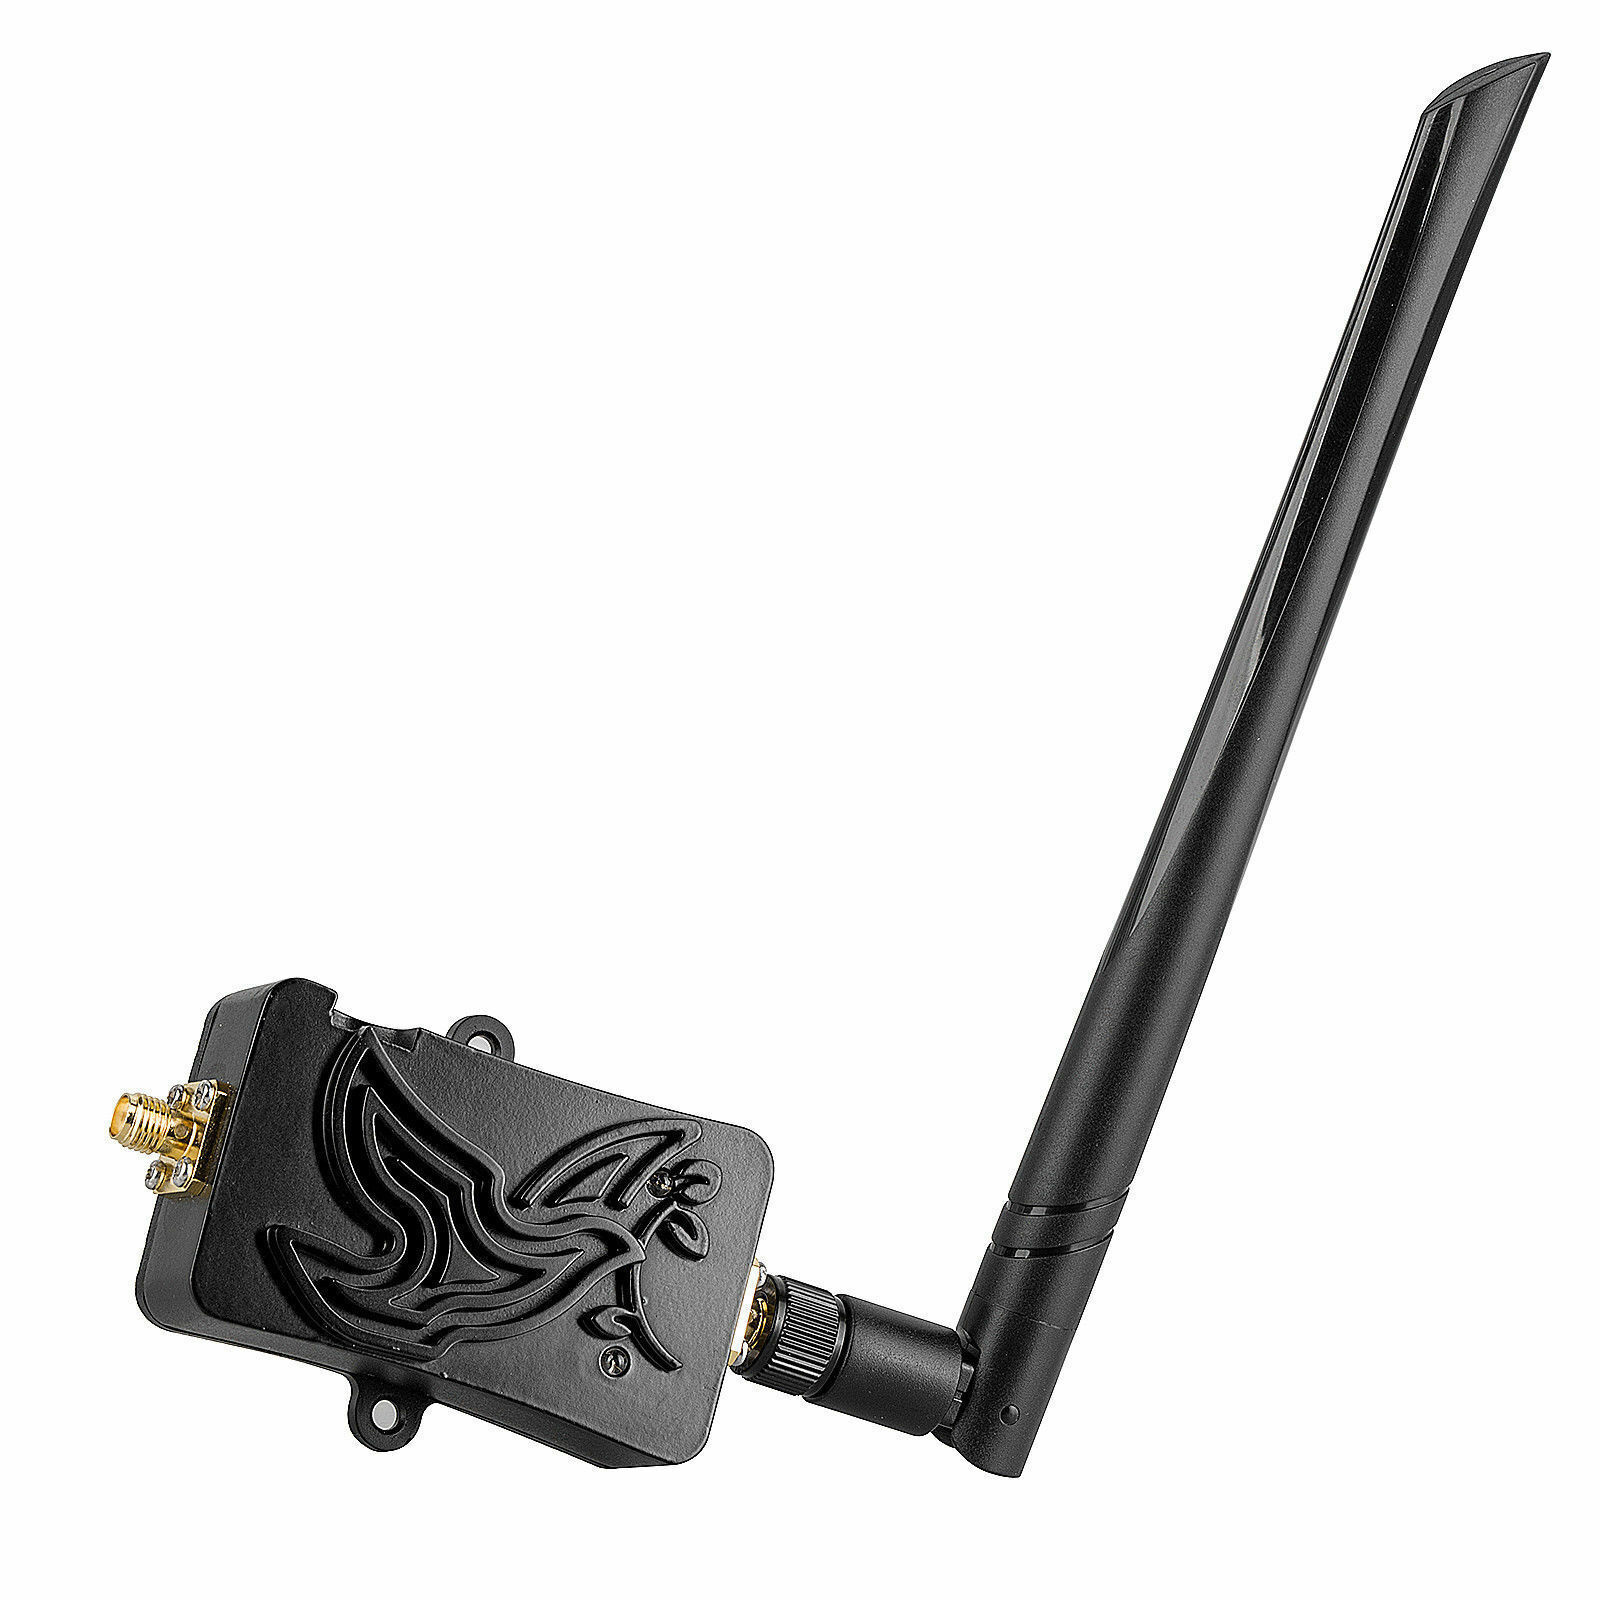 4W WiFi Booster 2.4GHz Wireless Router Broadband Range Signal Amplifier Antenna